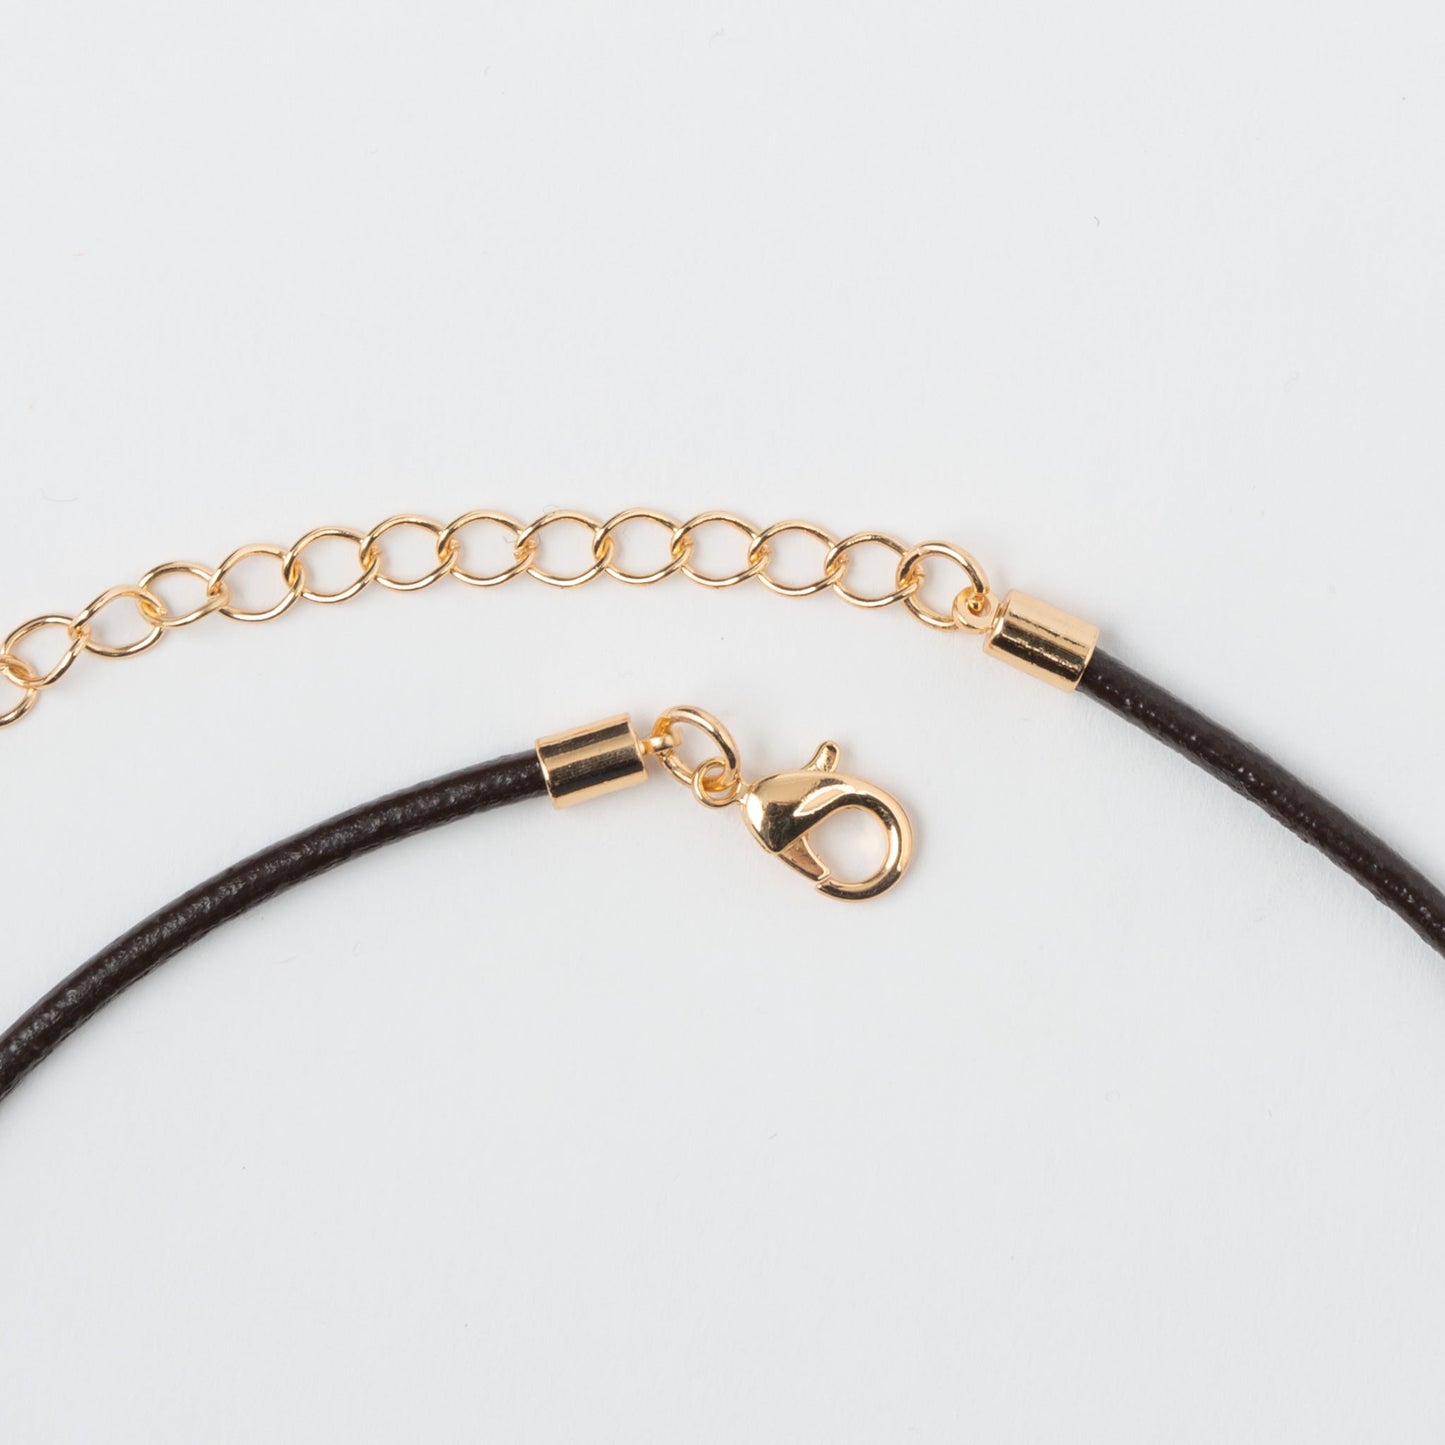 Brinley Curled Metal Necklace